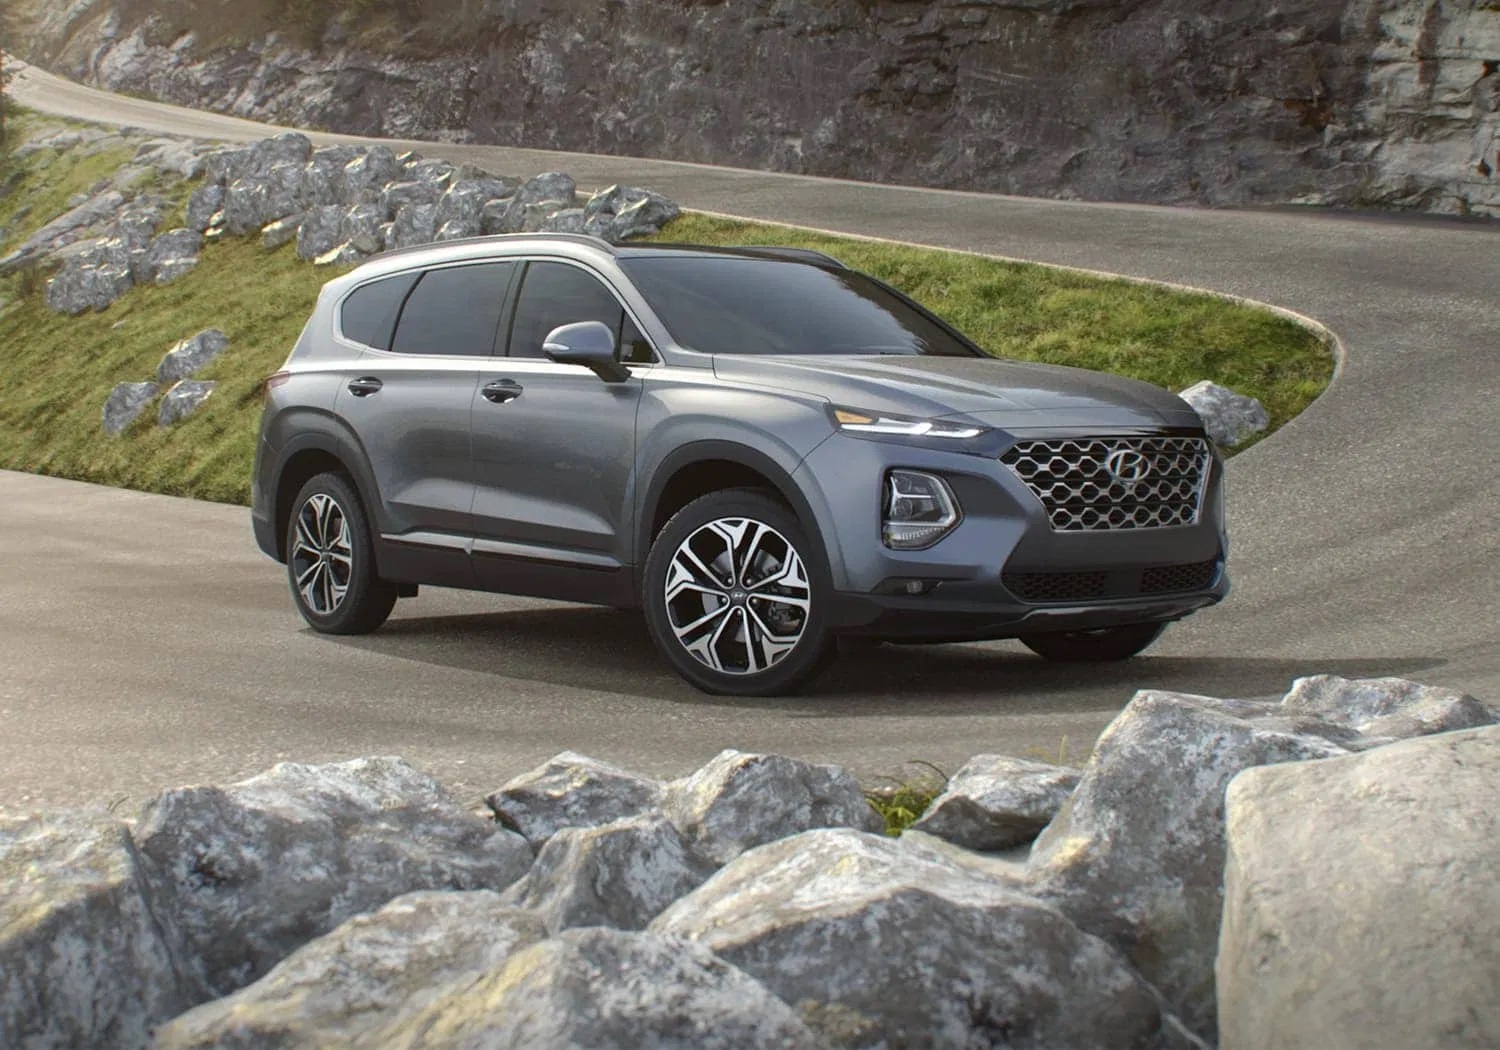 2021 Hyundai Santa Fe Release Date and Changes - Future SUVs